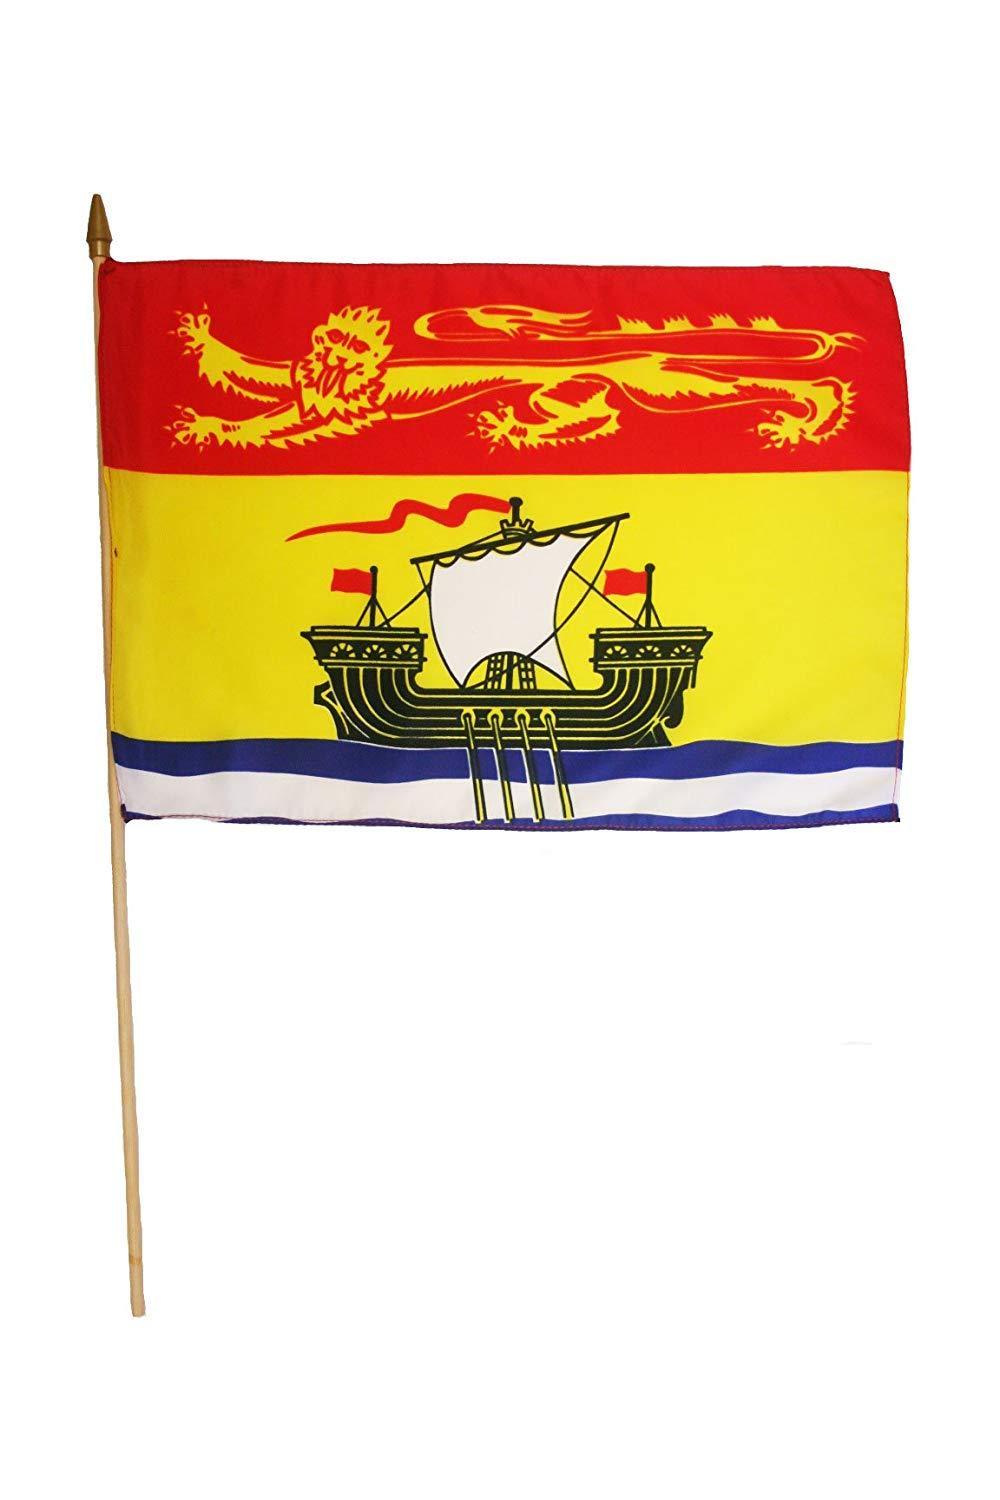 New Brunswick 12X18 Flags